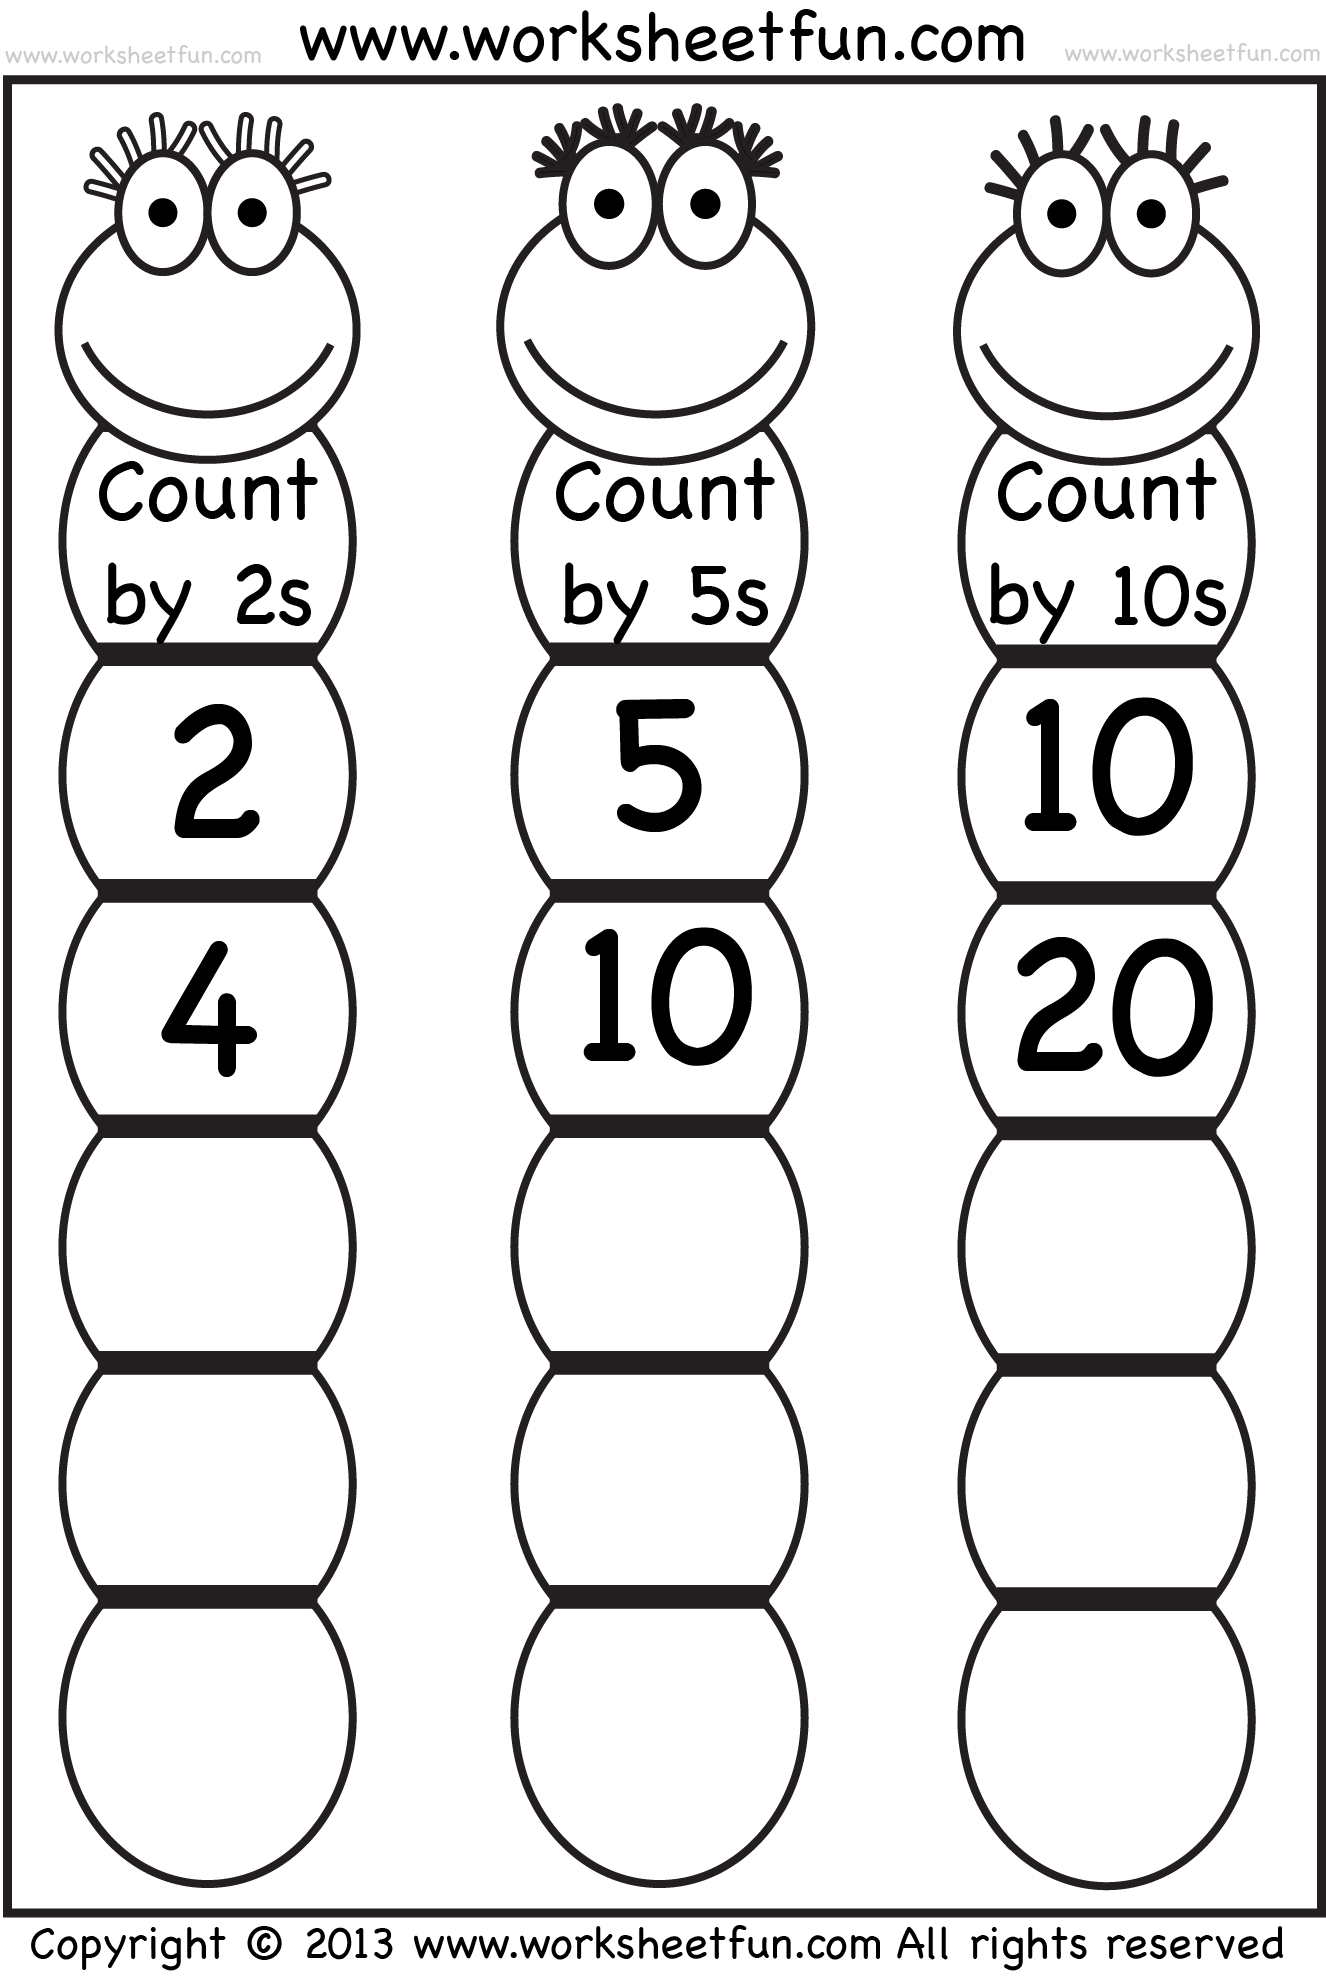 Worksheet Fun Skip Counting CountingWorksheets